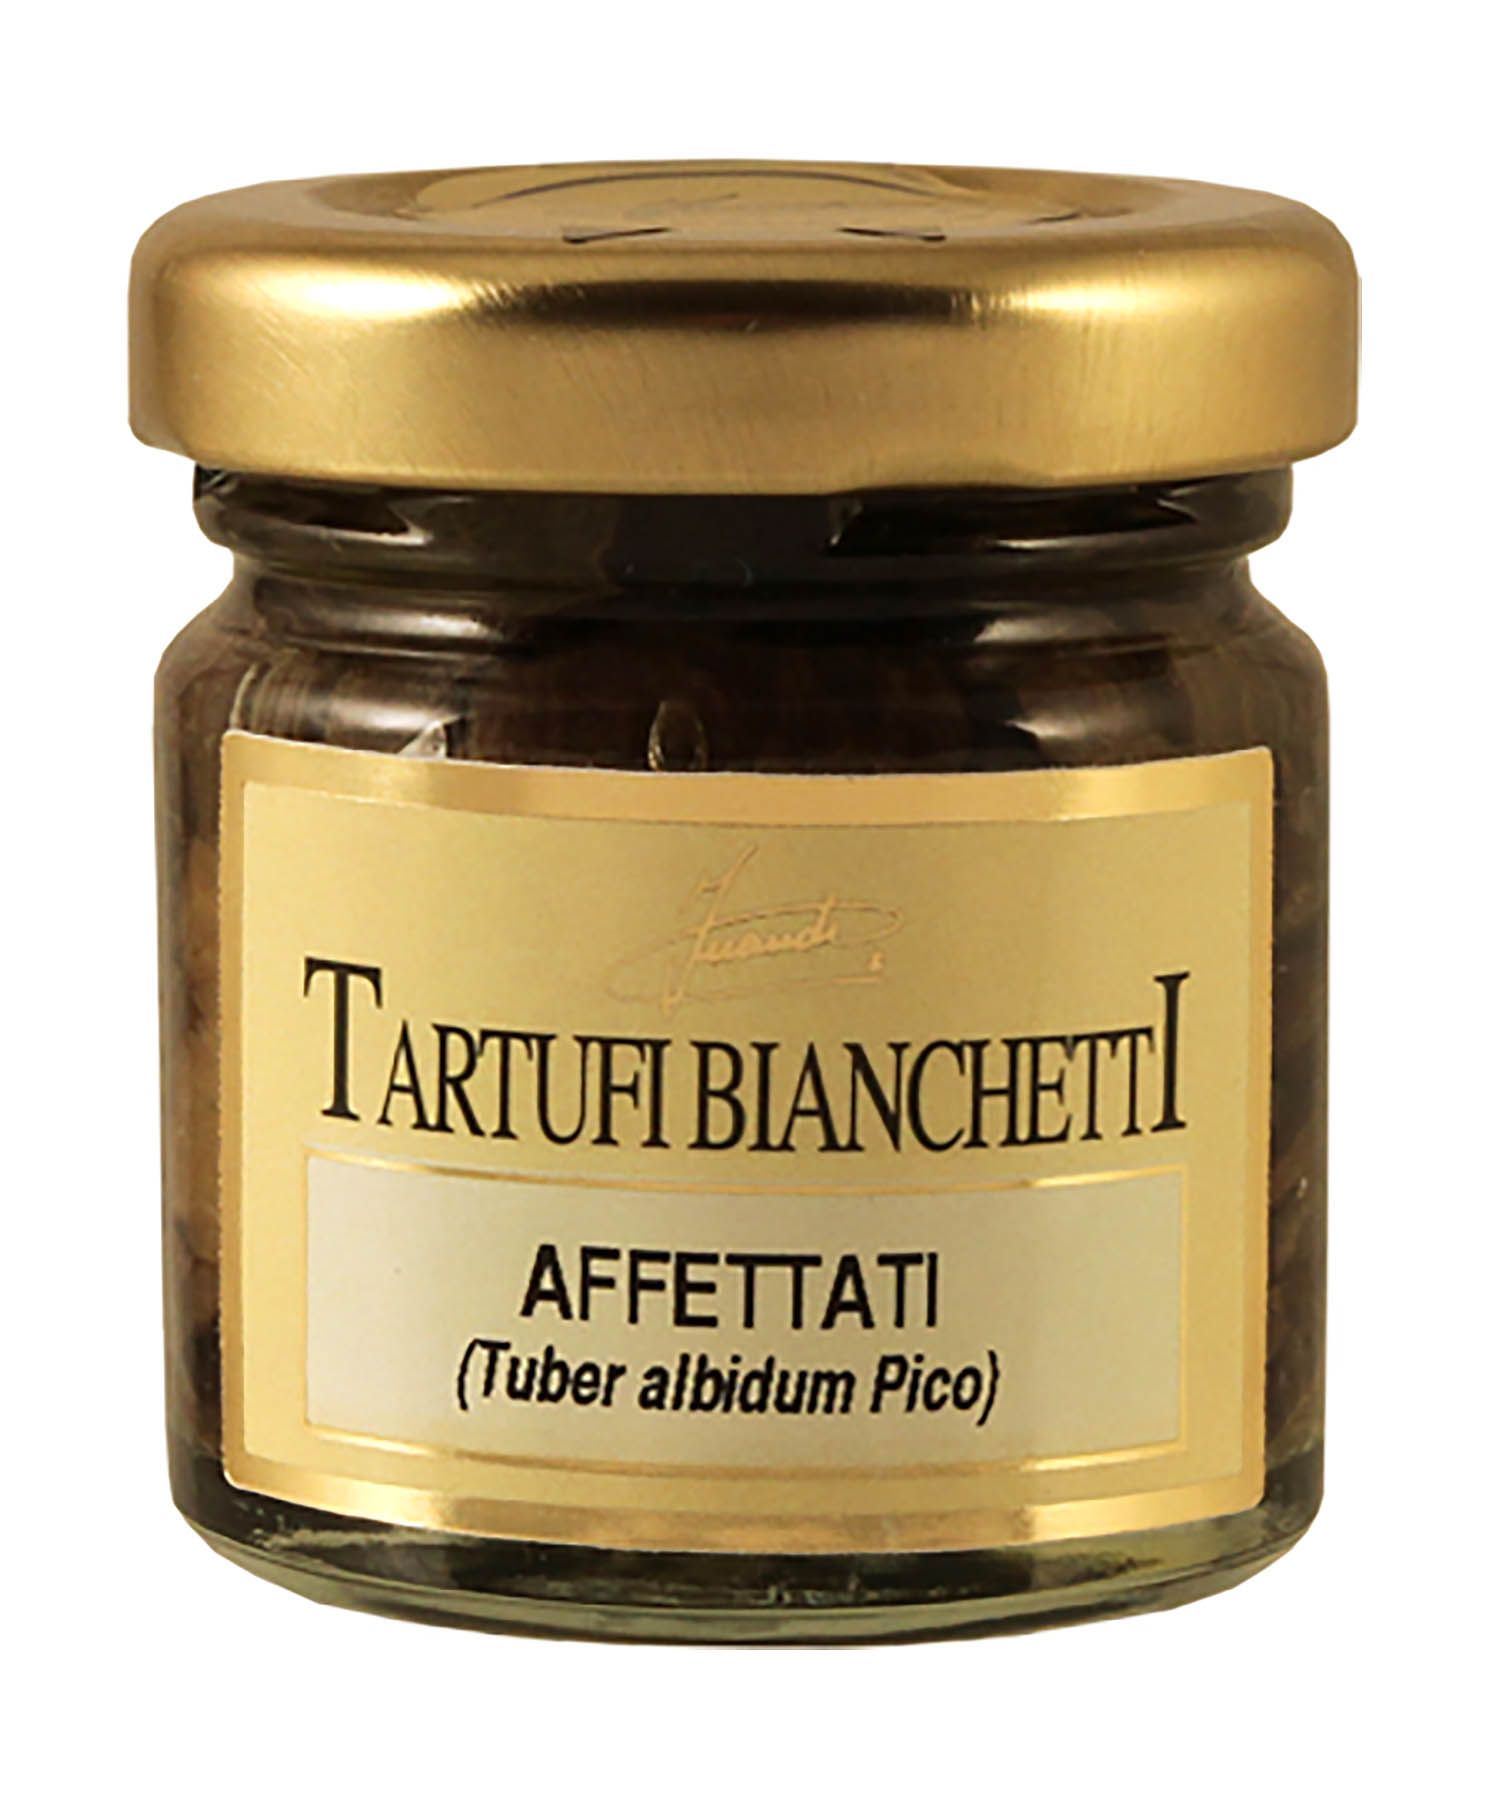 Tartufi Bianchetti Affettati 30g